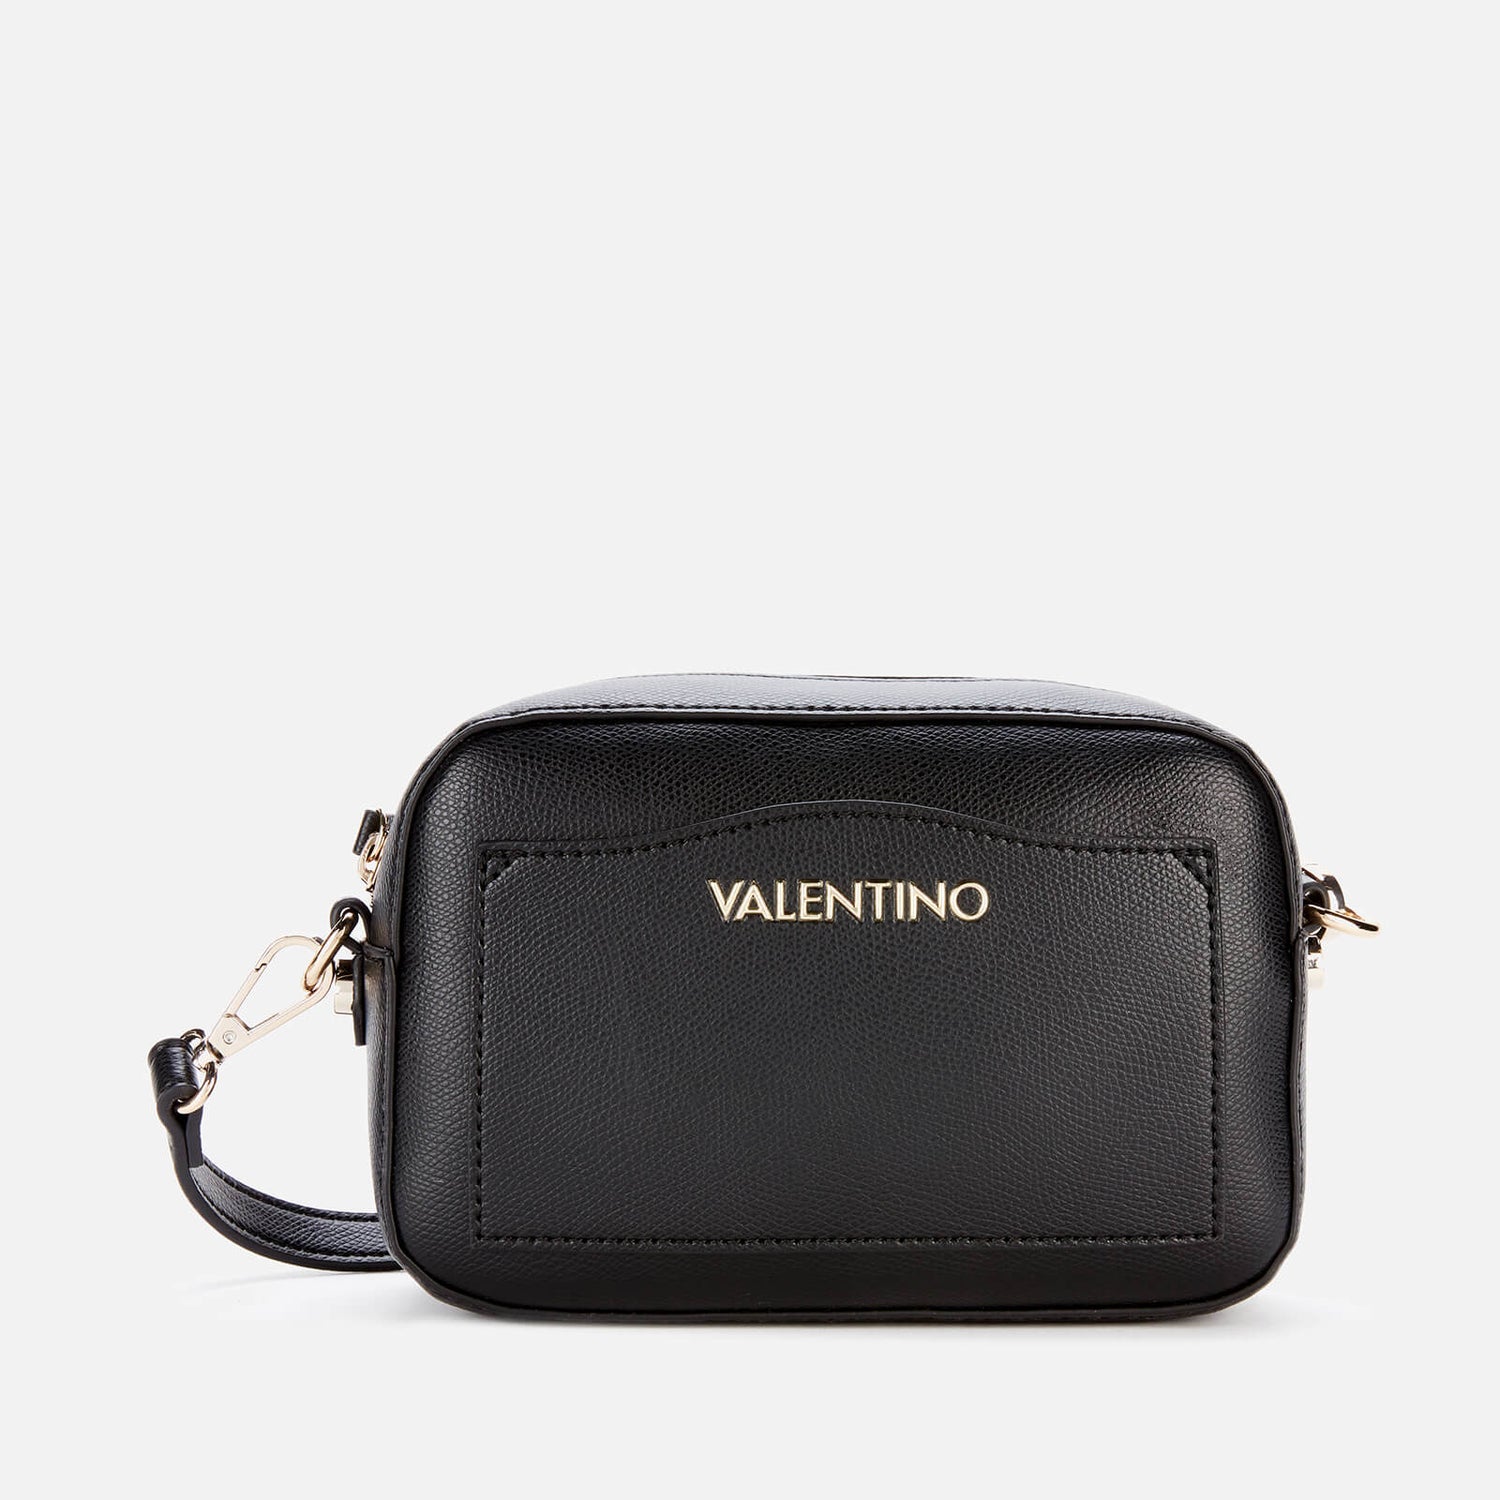 Valentino Bags Women's Maple Cross Body Bag - Black